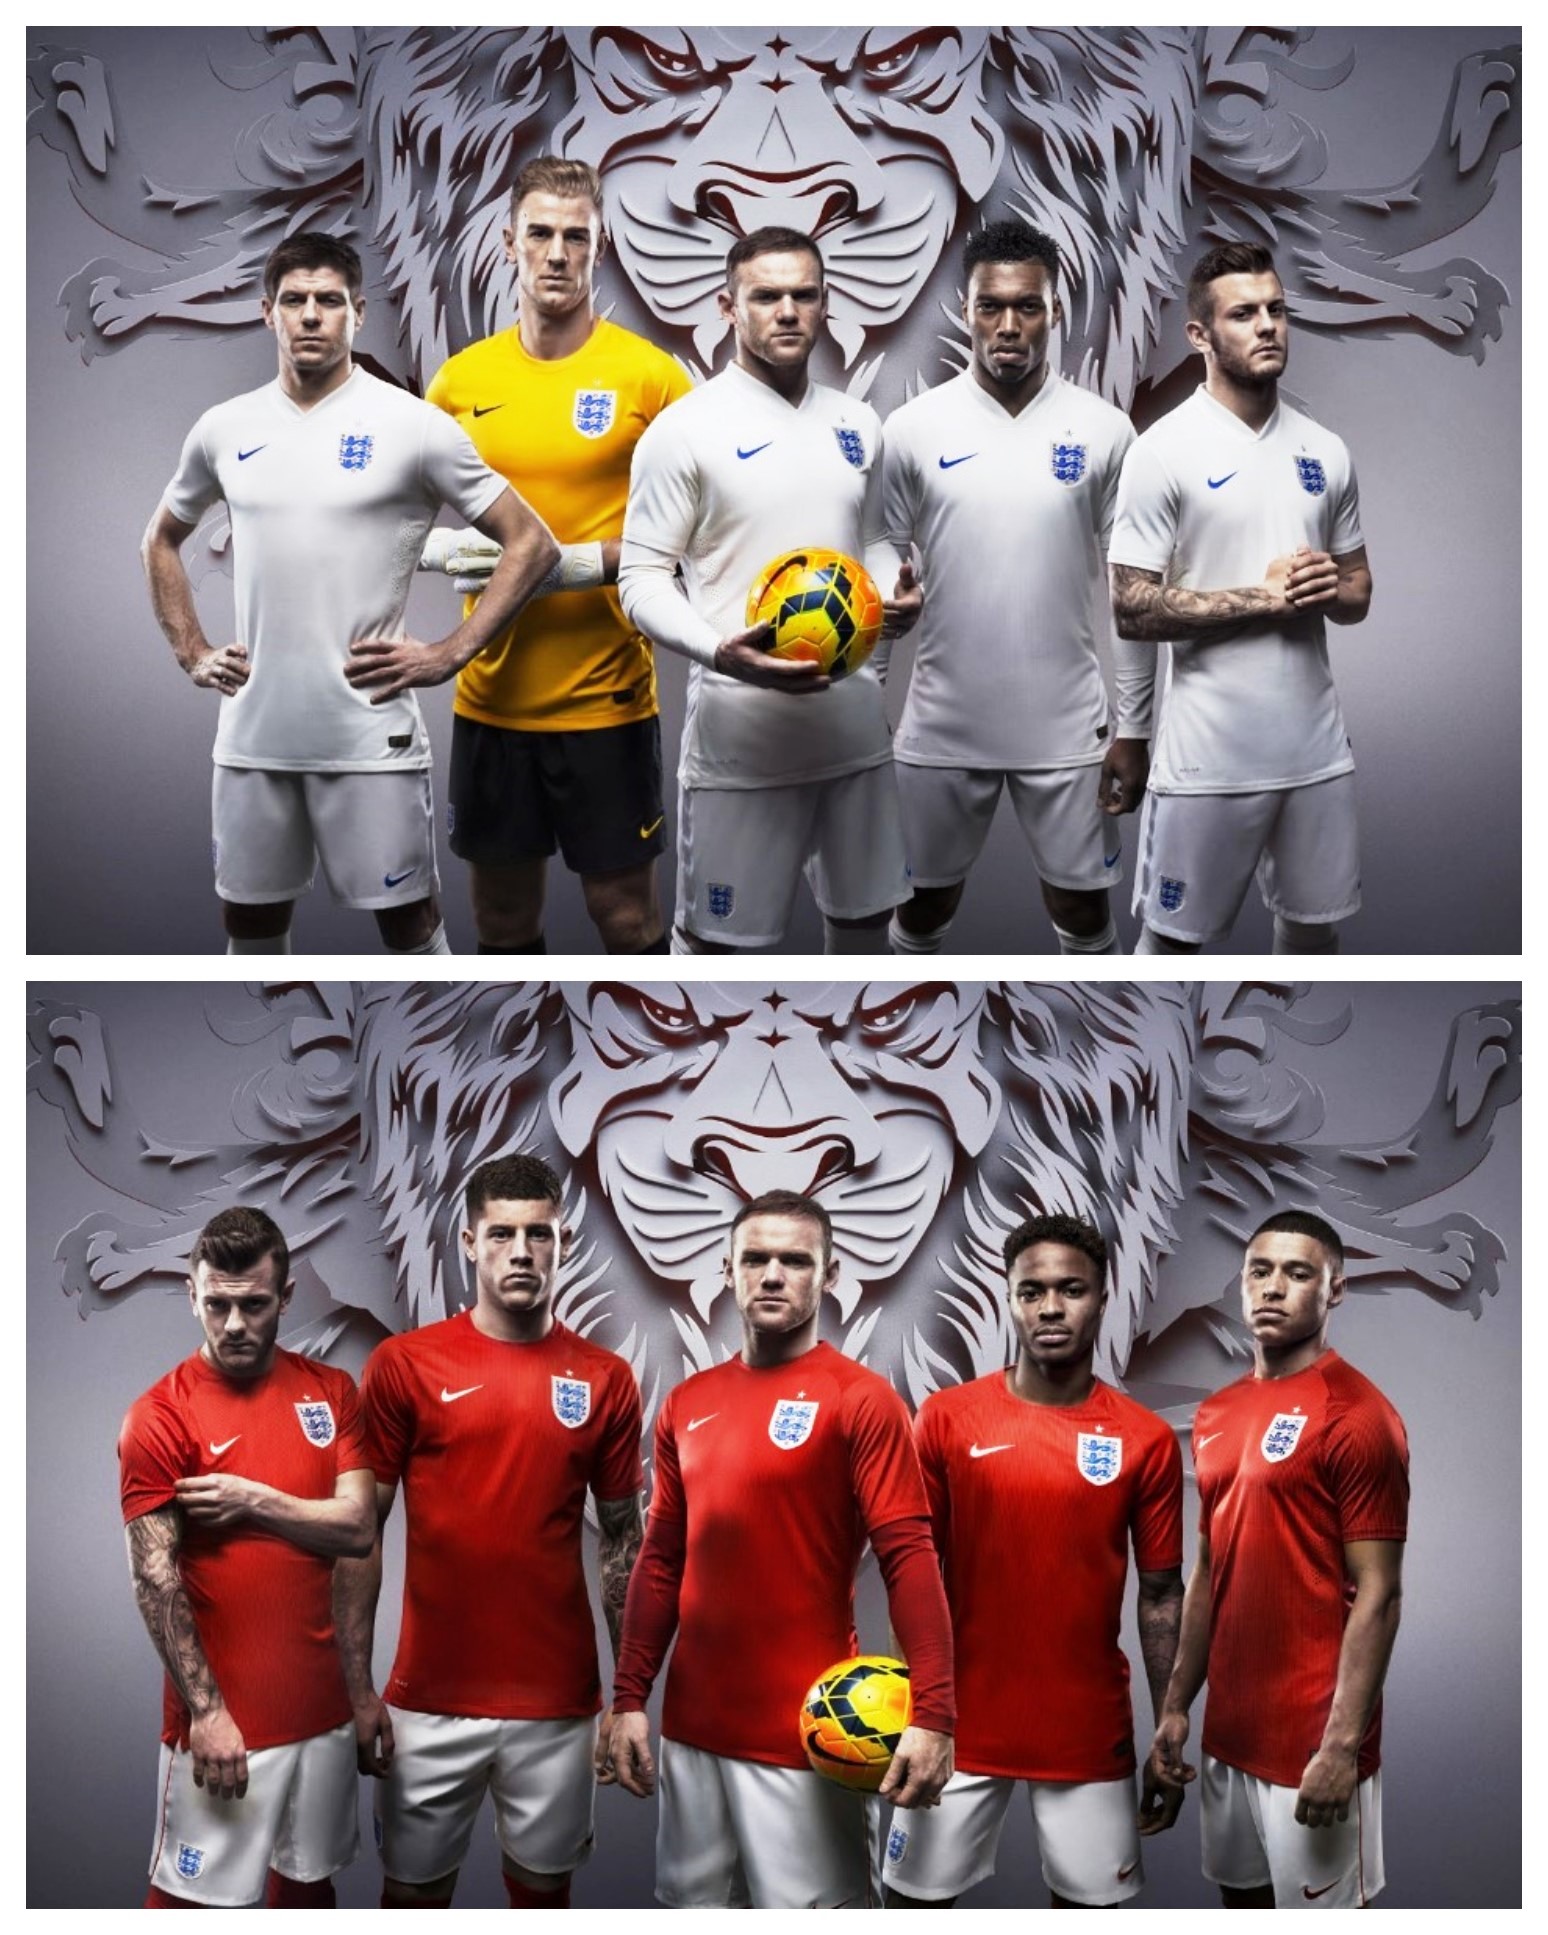 England 2014 World Cup home and away kits © Nike/Football Association